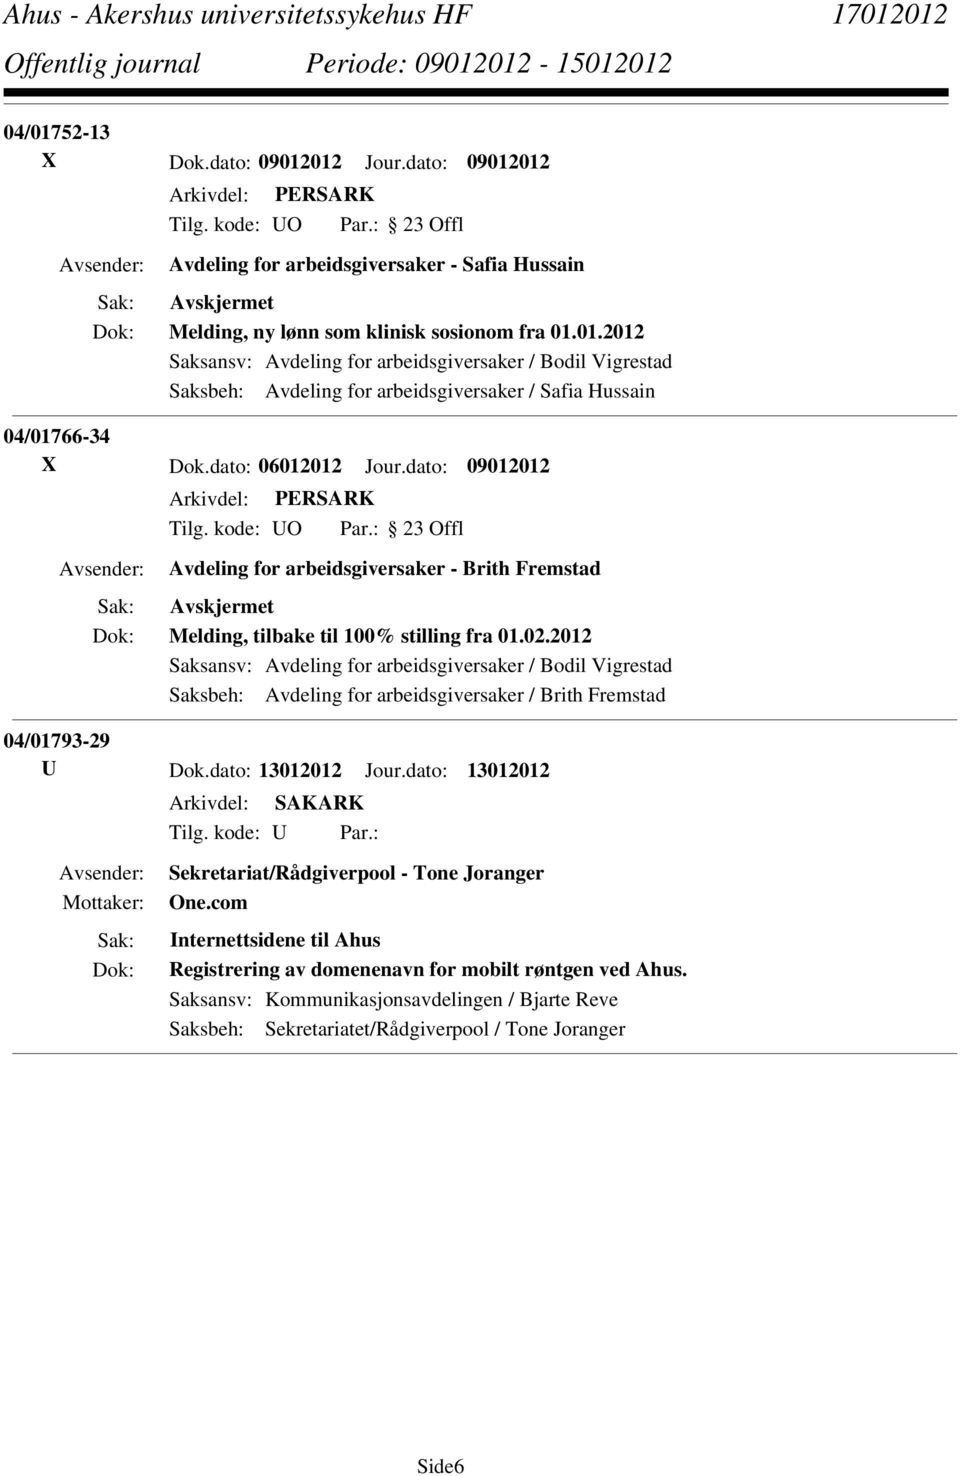 2012 Saksansv: Avdeling for arbeidsgiversaker / Bodil Vigrestad Saksbeh: Avdeling for arbeidsgiversaker / Brith Fremstad 04/01793-29 U Dok.dato: 13012012 Jour.dato: 13012012 Tilg. kode: U Par.